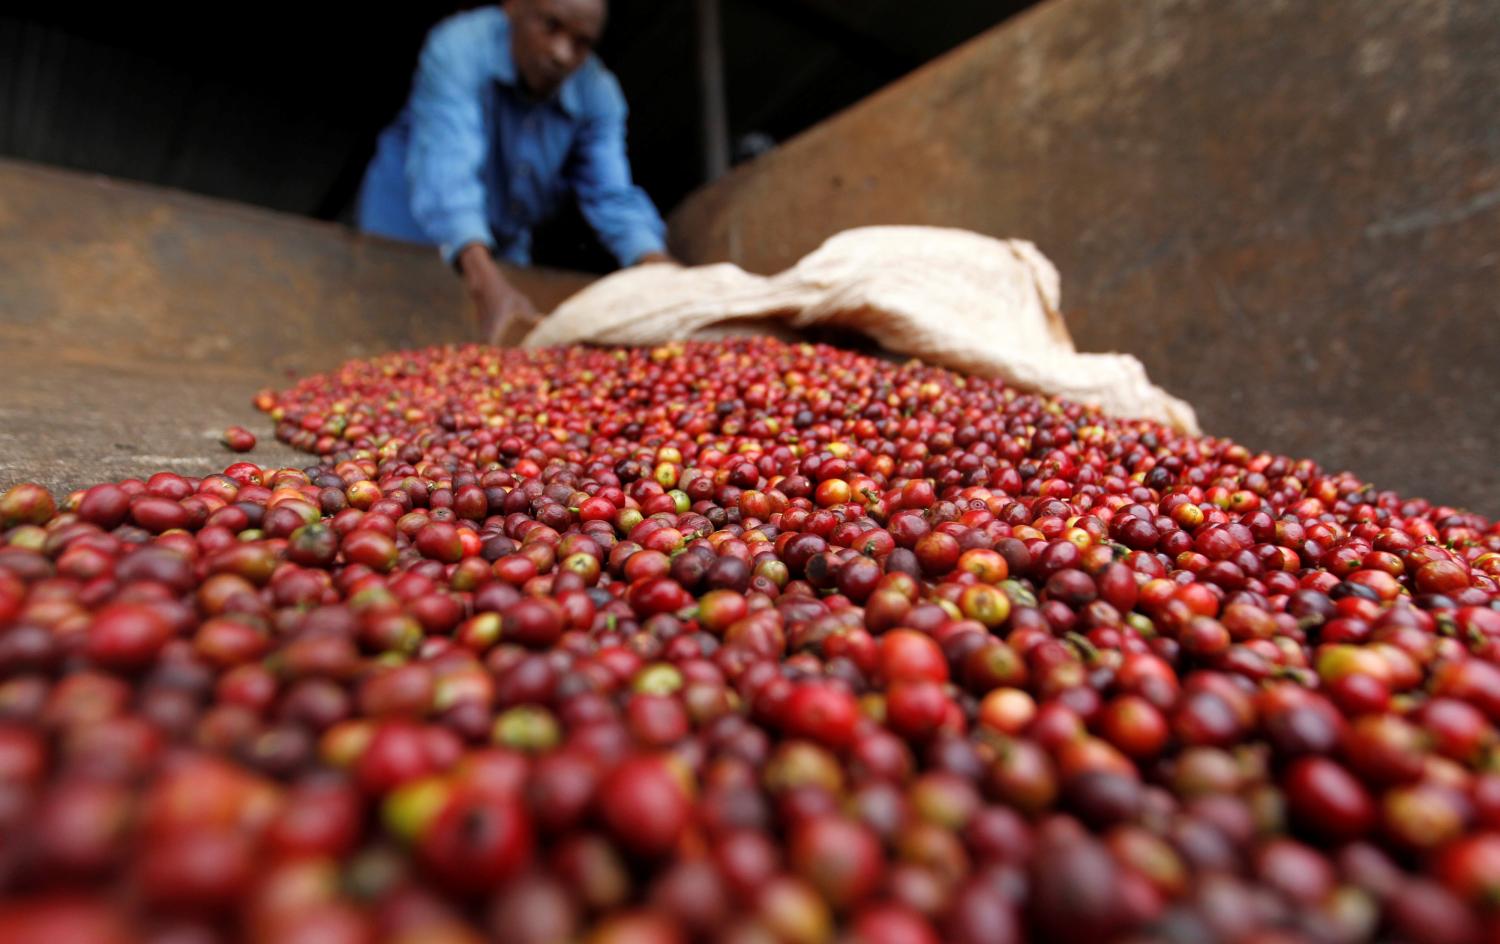 A worker sorts coffee berries at a factory in Kienjege, located in western Kirinyaga county, northwest of Kenya's capital Nairobi